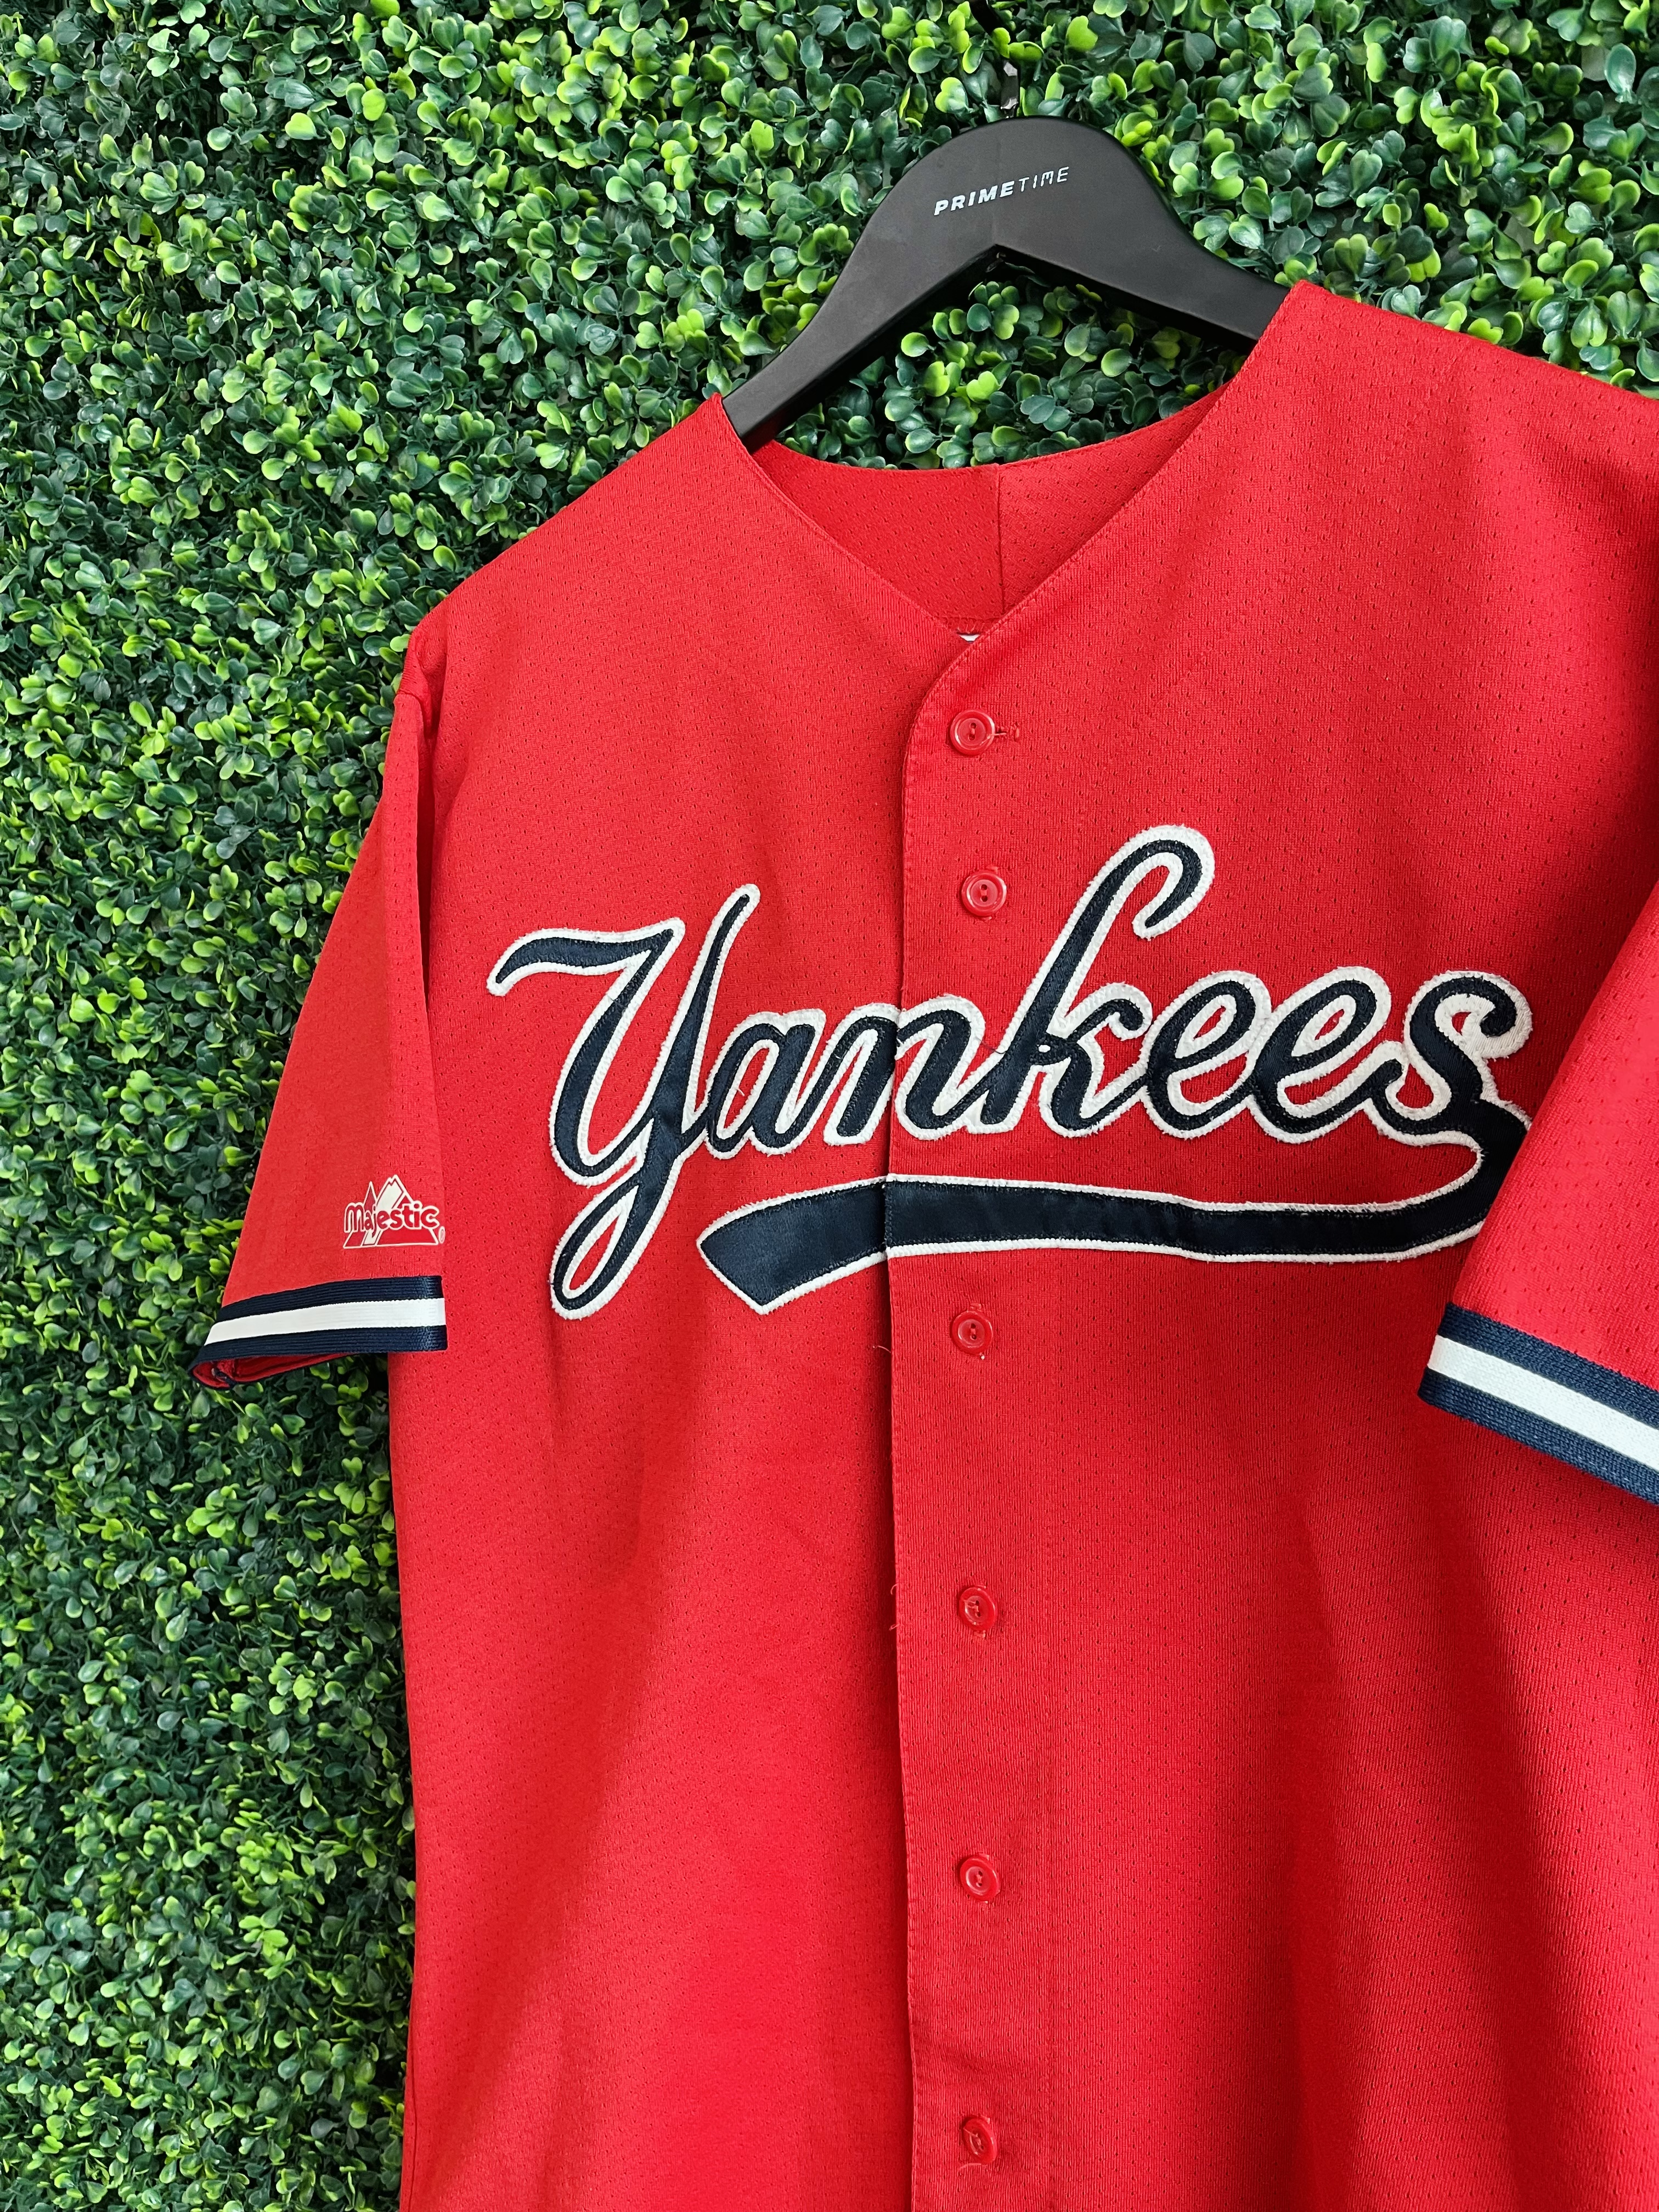 Vintage Majestic NY Yankees Jersey No Name